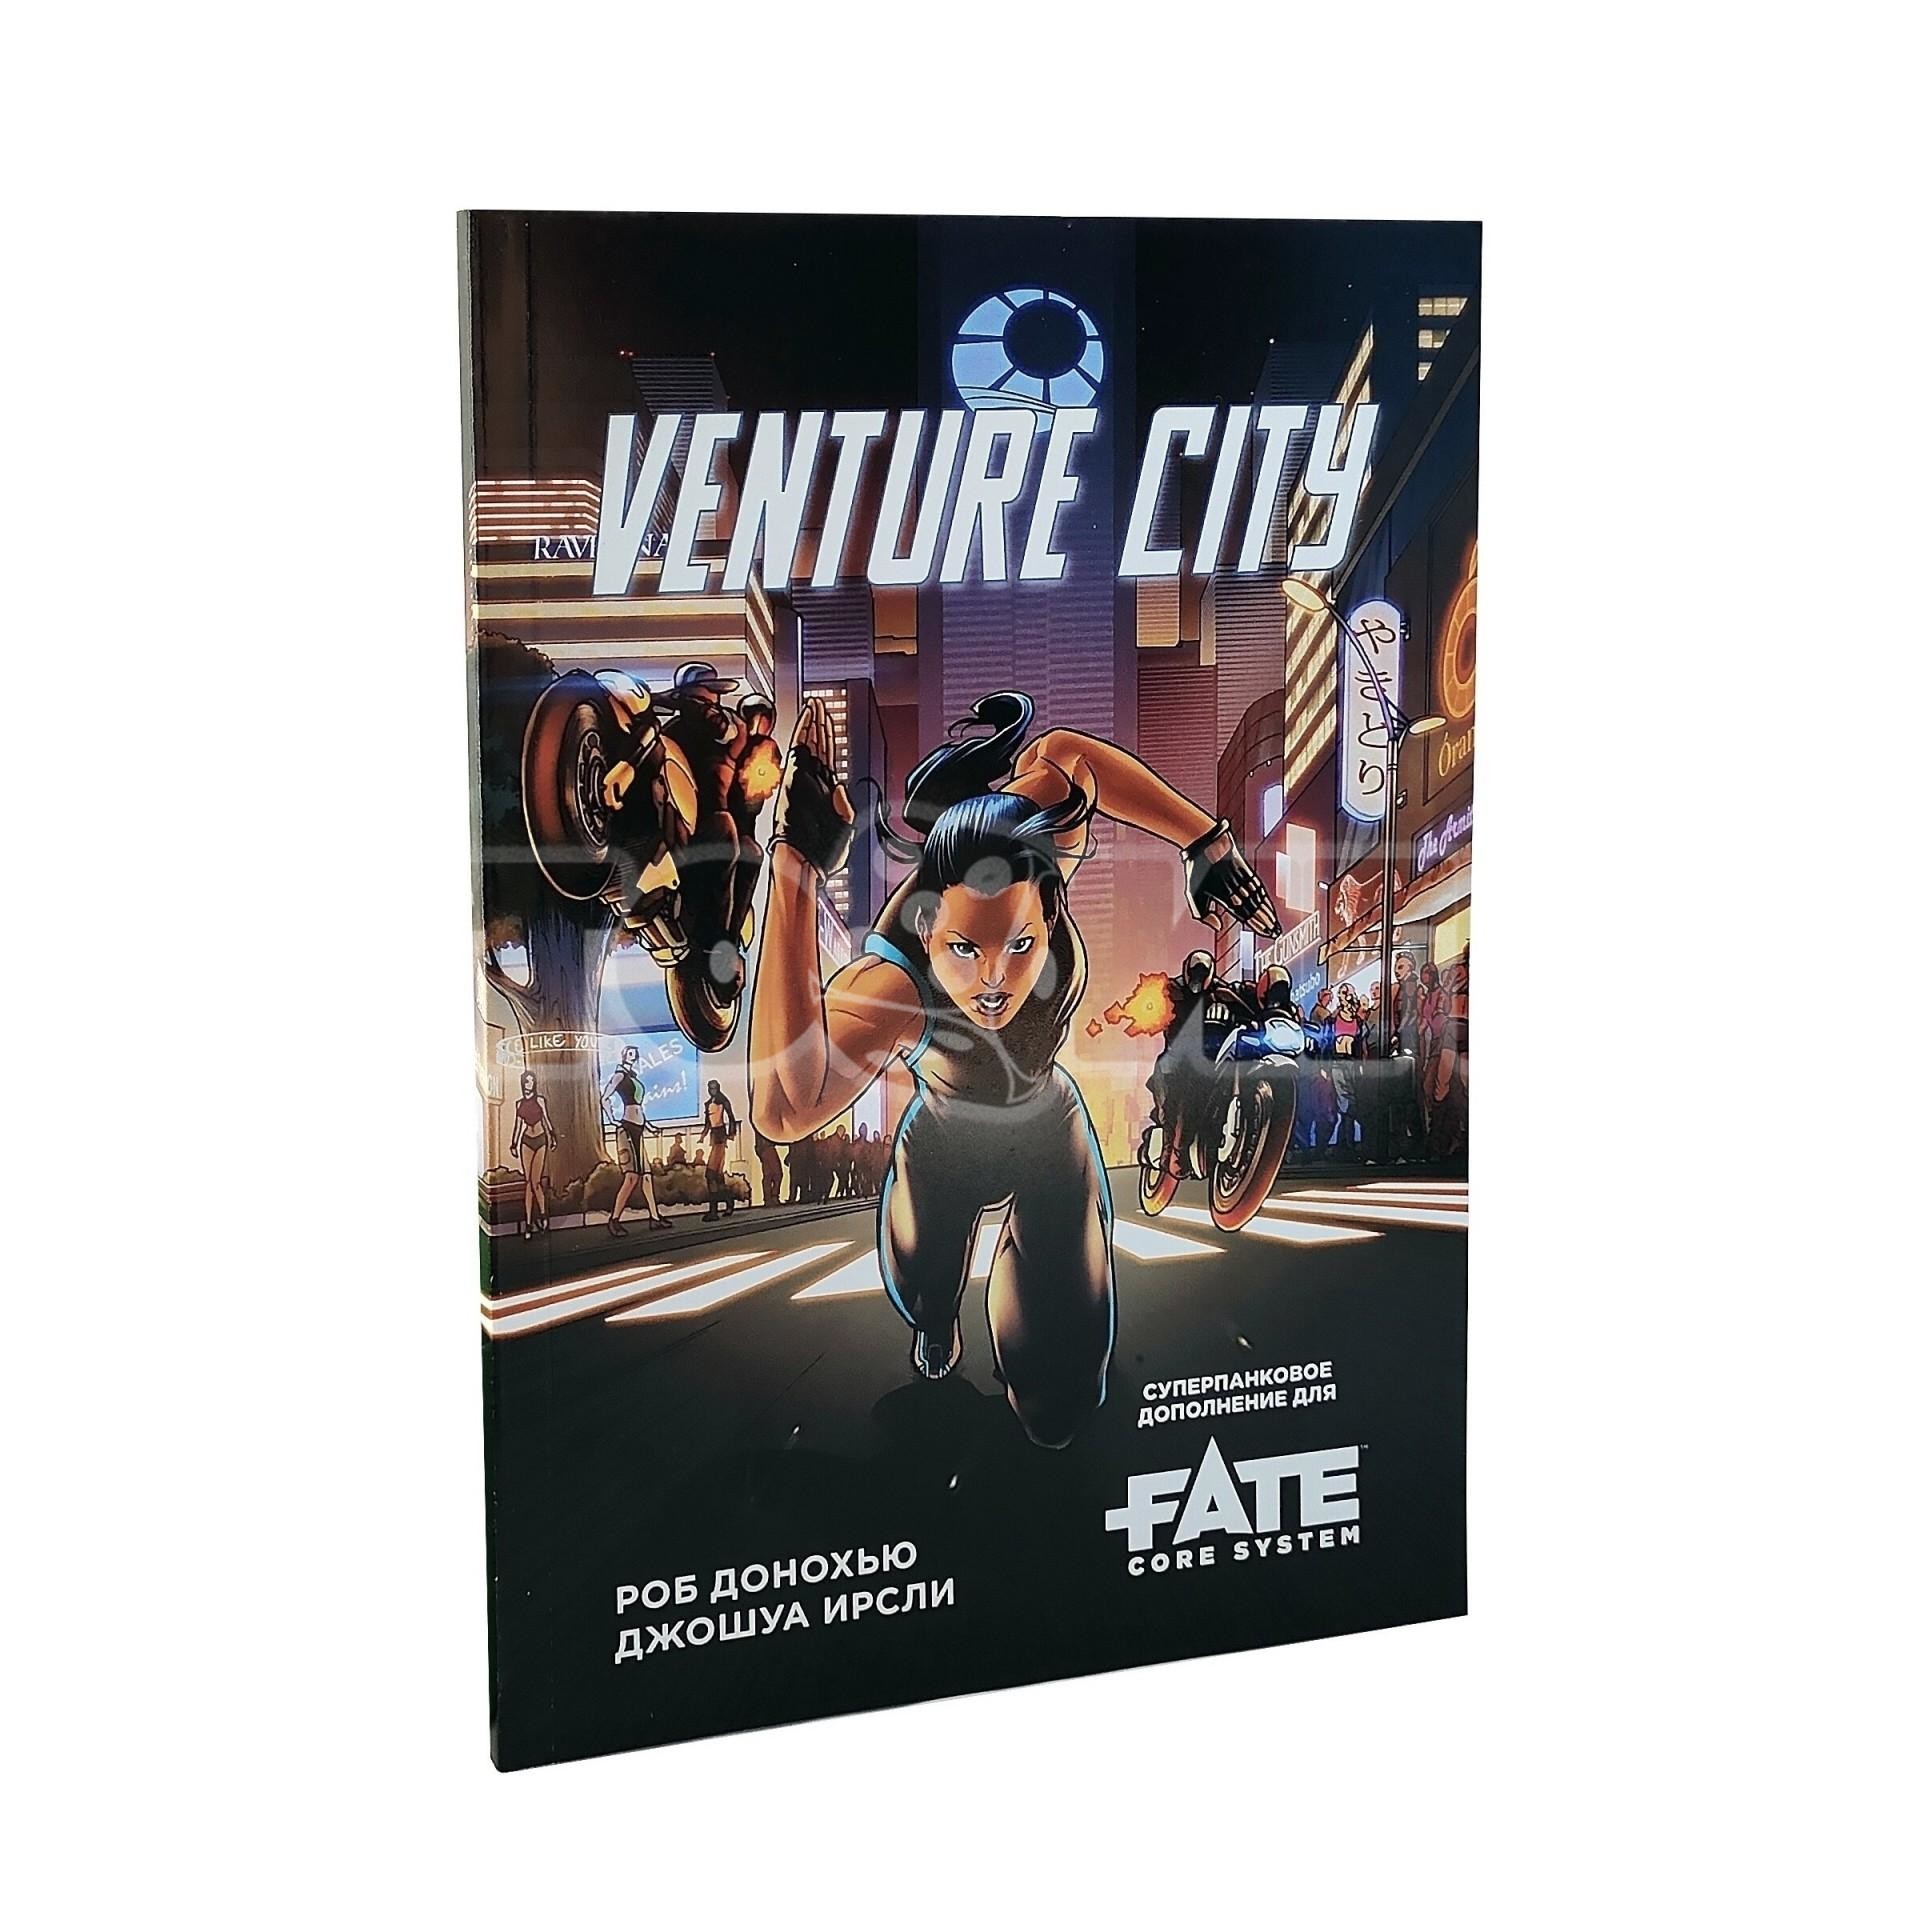 Fate Core. Venture City